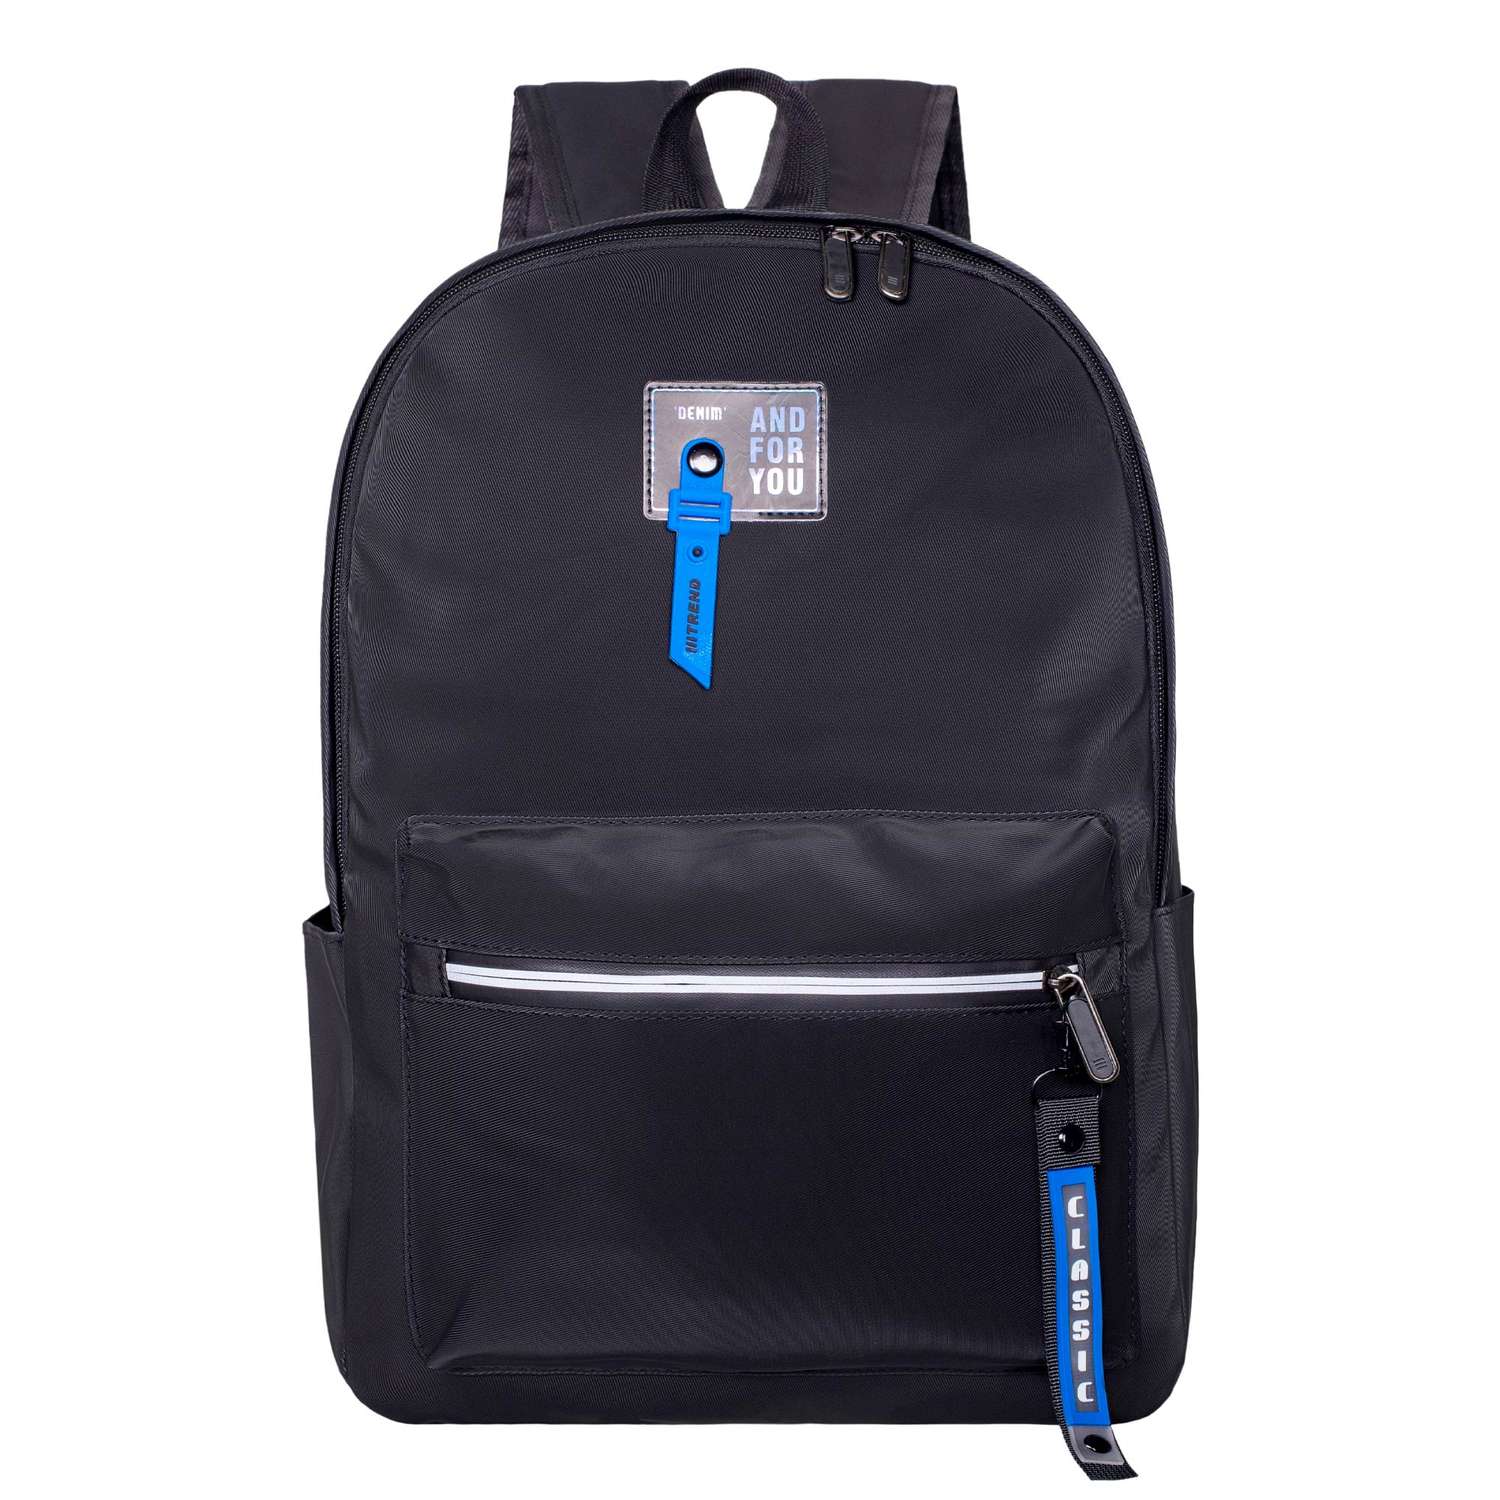 Рюкзак MERLIN G704 черно-синий - фото 1